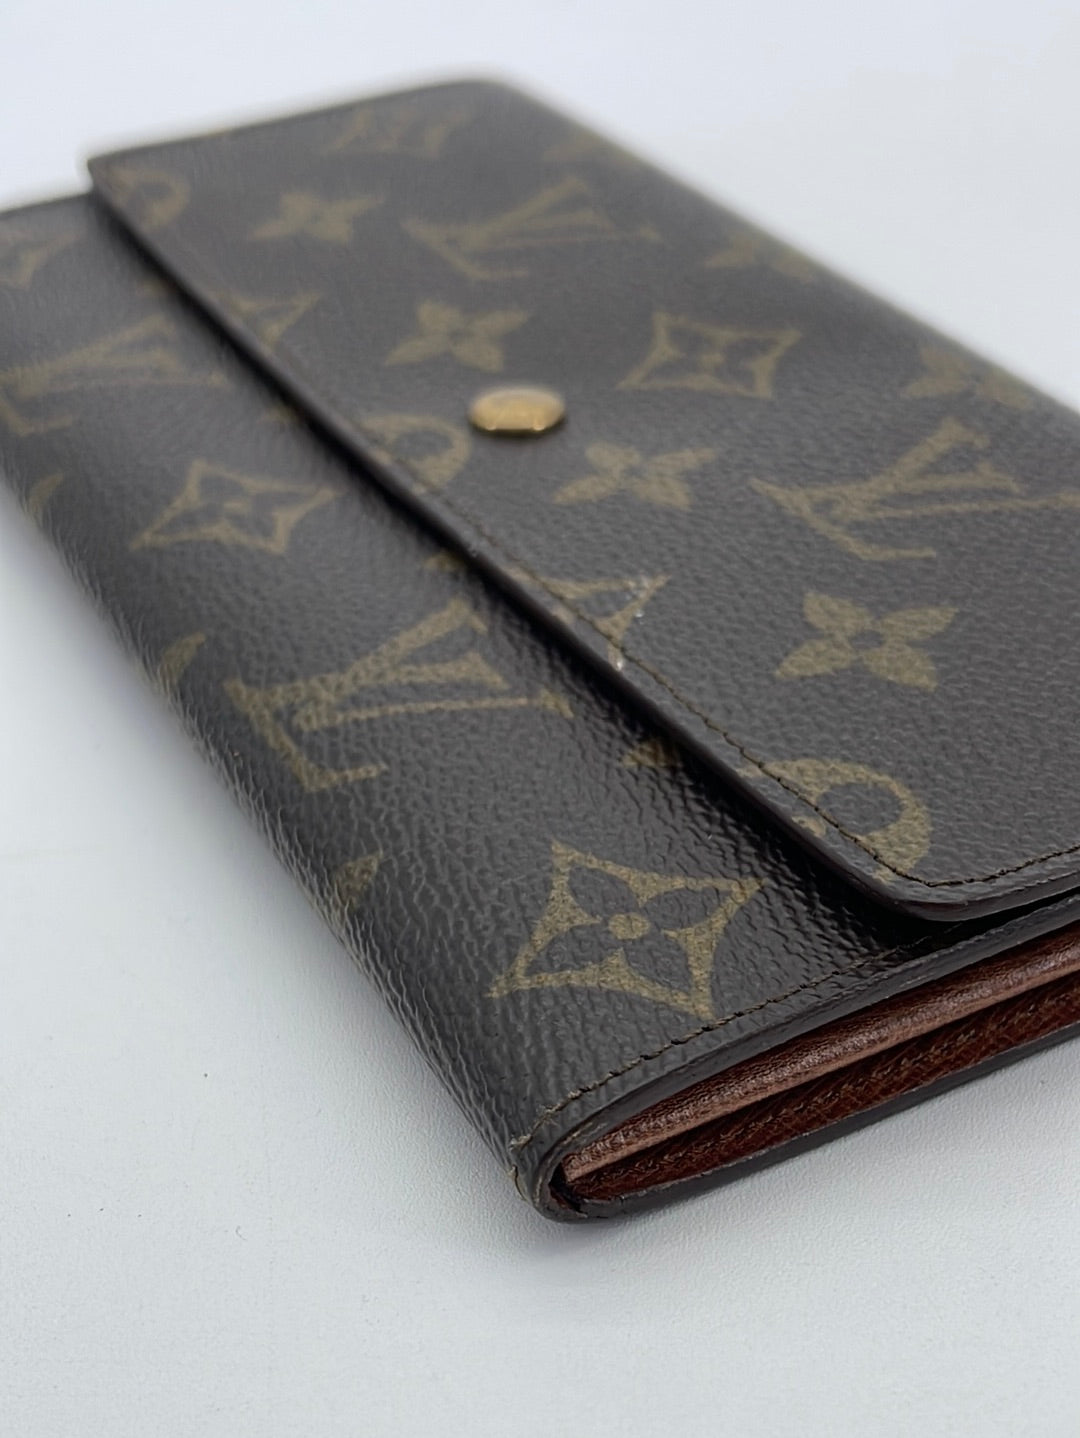 PRELOVED Louis Vuitton Monogran Sarah Etoile Wallet SP1099 020923 –  KimmieBBags LLC